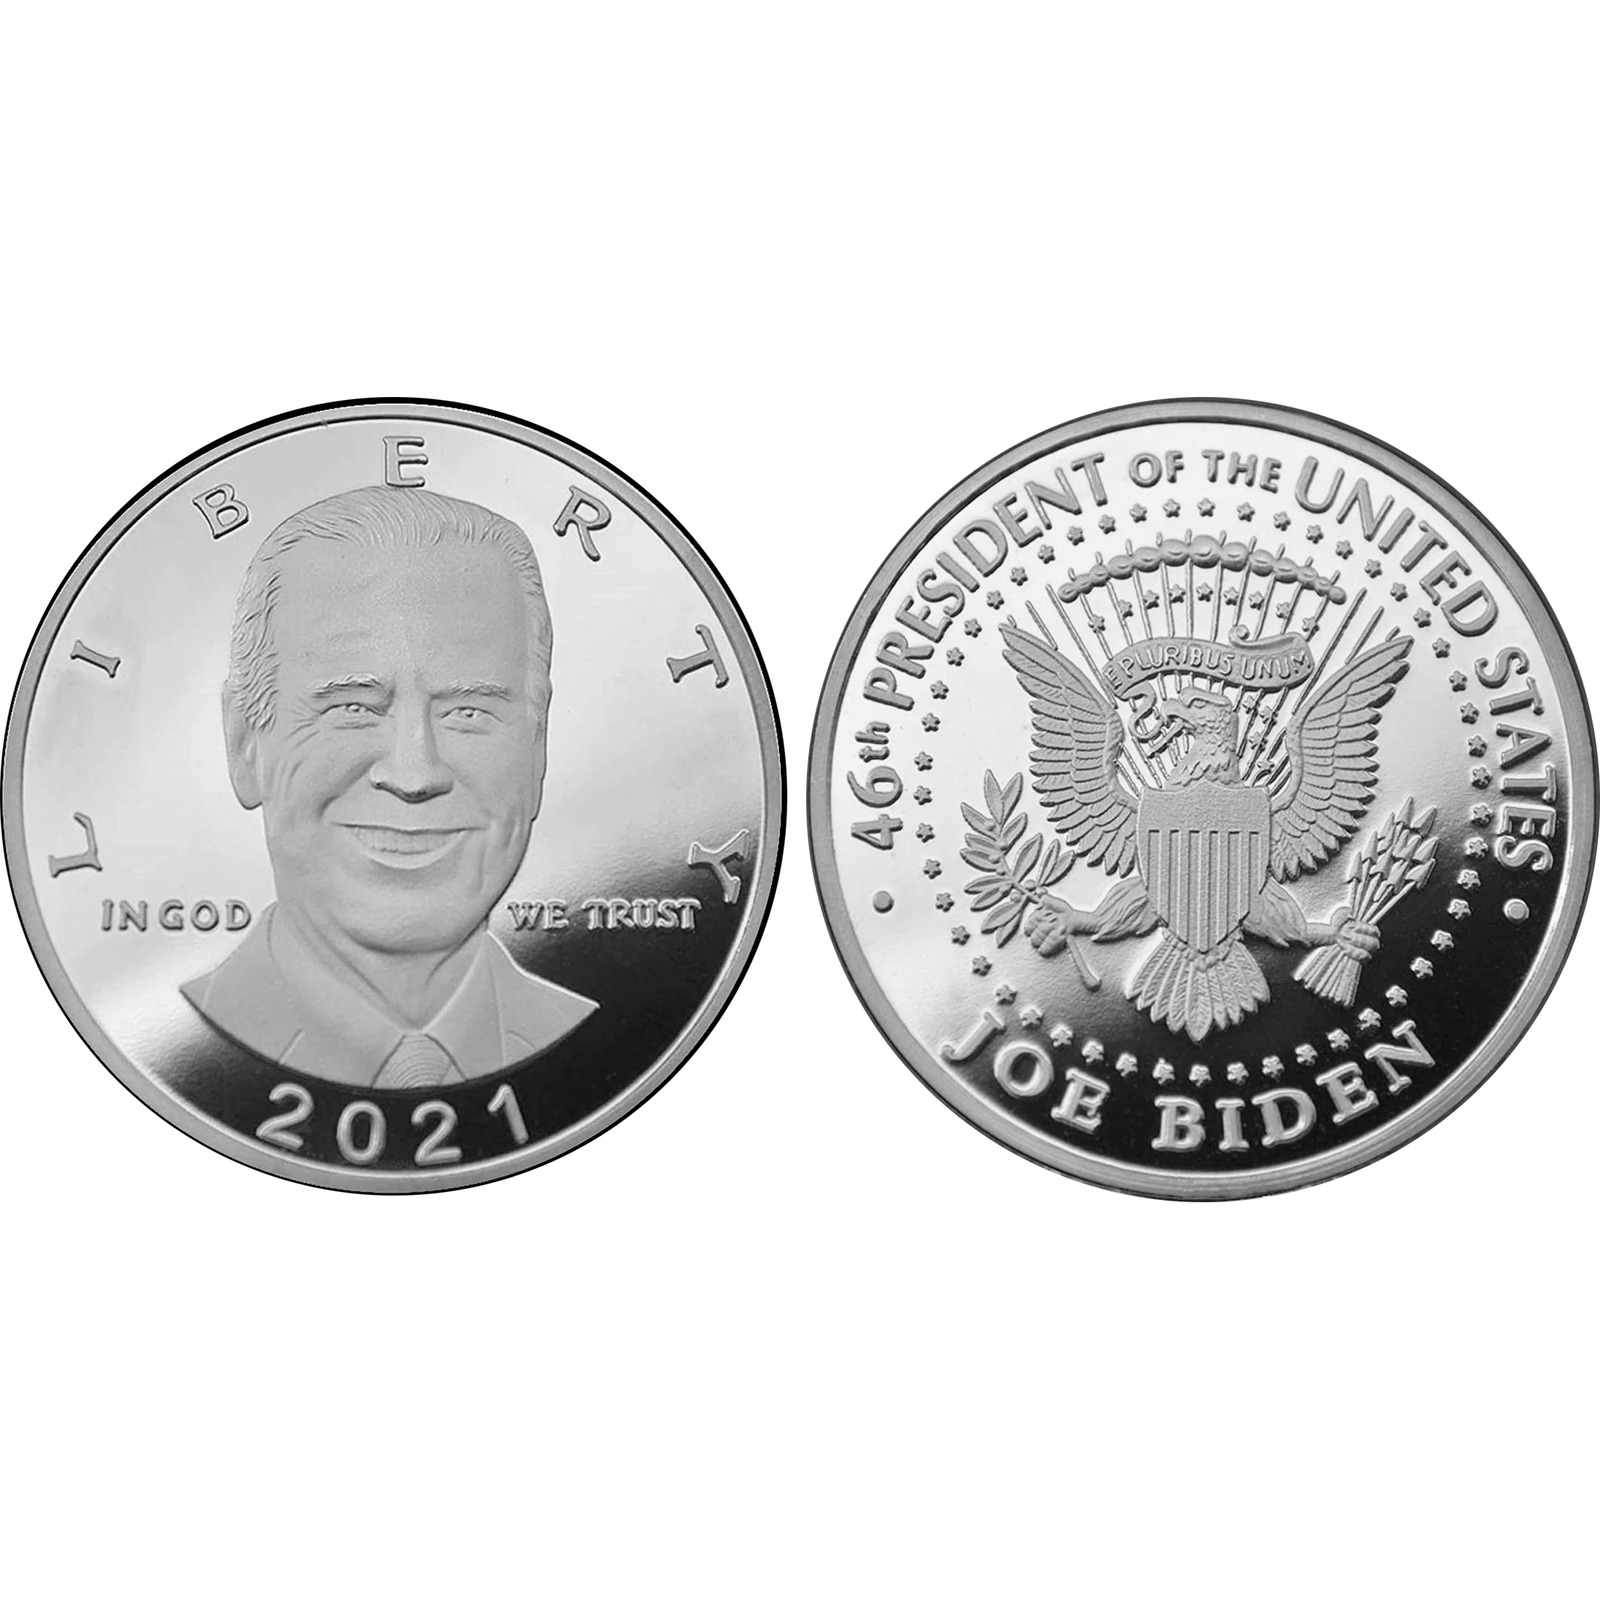 BL13-005 President Joe Biden Sterling Silver plated 2021 LIBERTY Challenge Coin